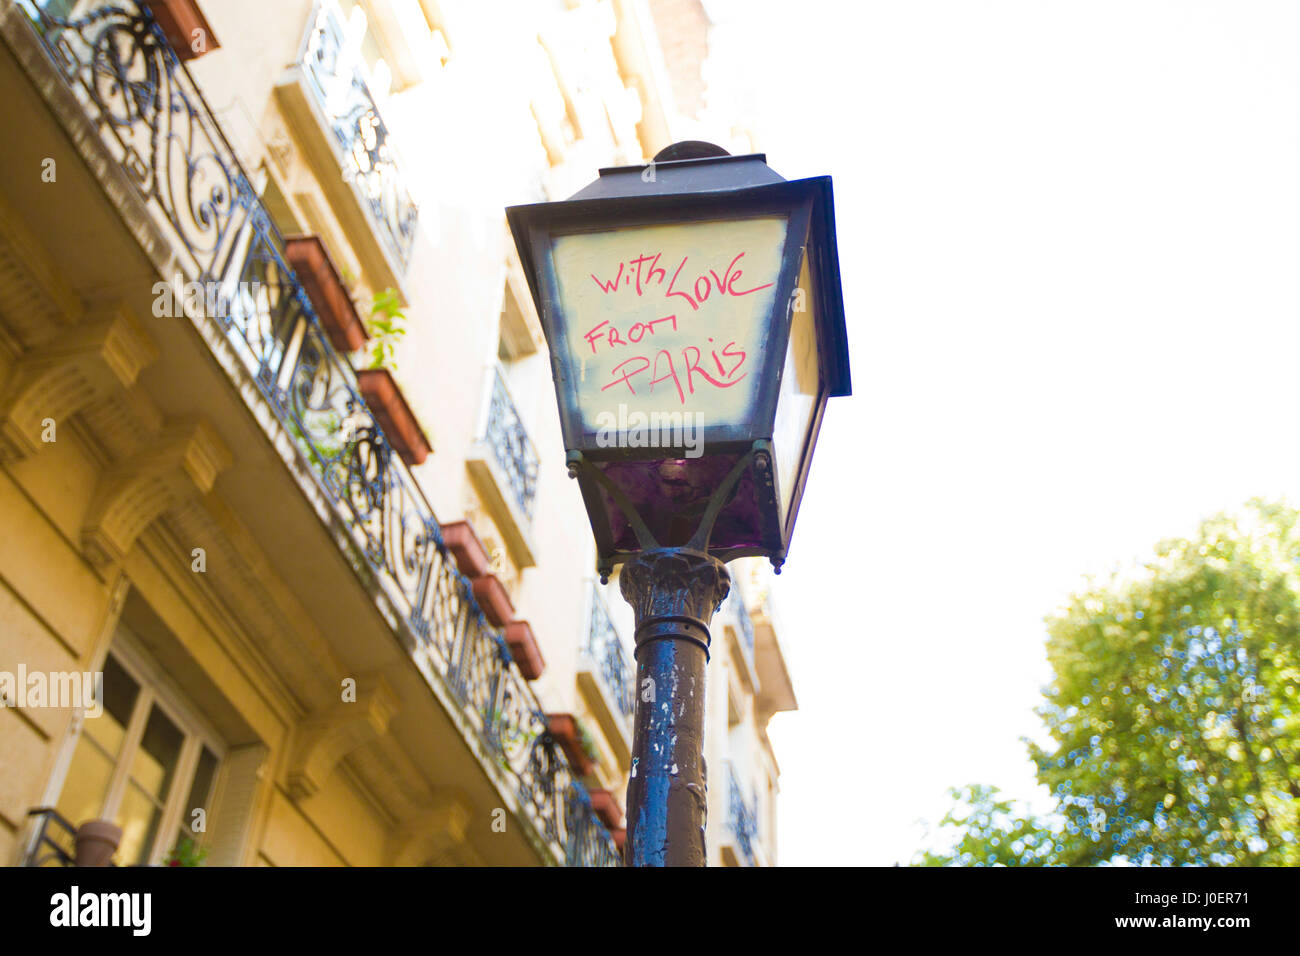 With Love From Paris' Graffiti on a Paris street lamp.' Stock Photo